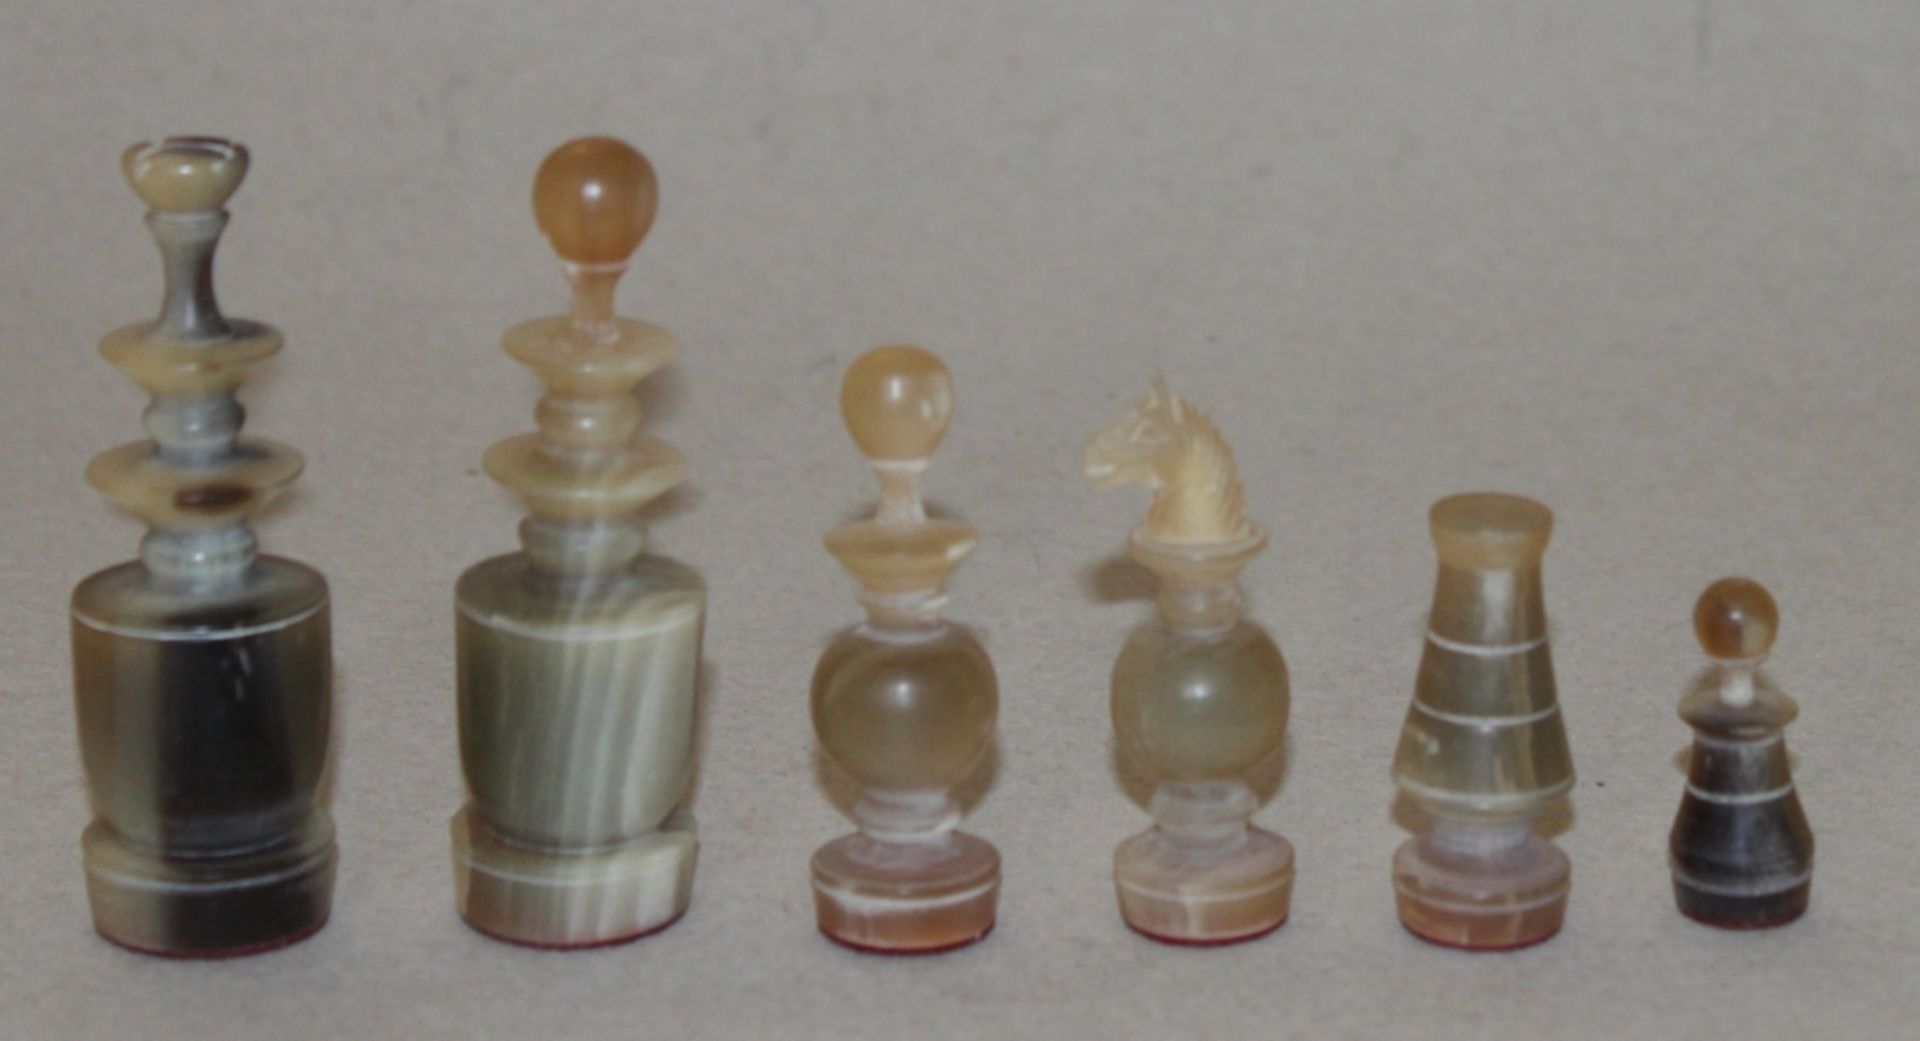 Asien. Vietnam. Schachfiguren im Régence Stil aus Horn. - Bild 2 aus 3